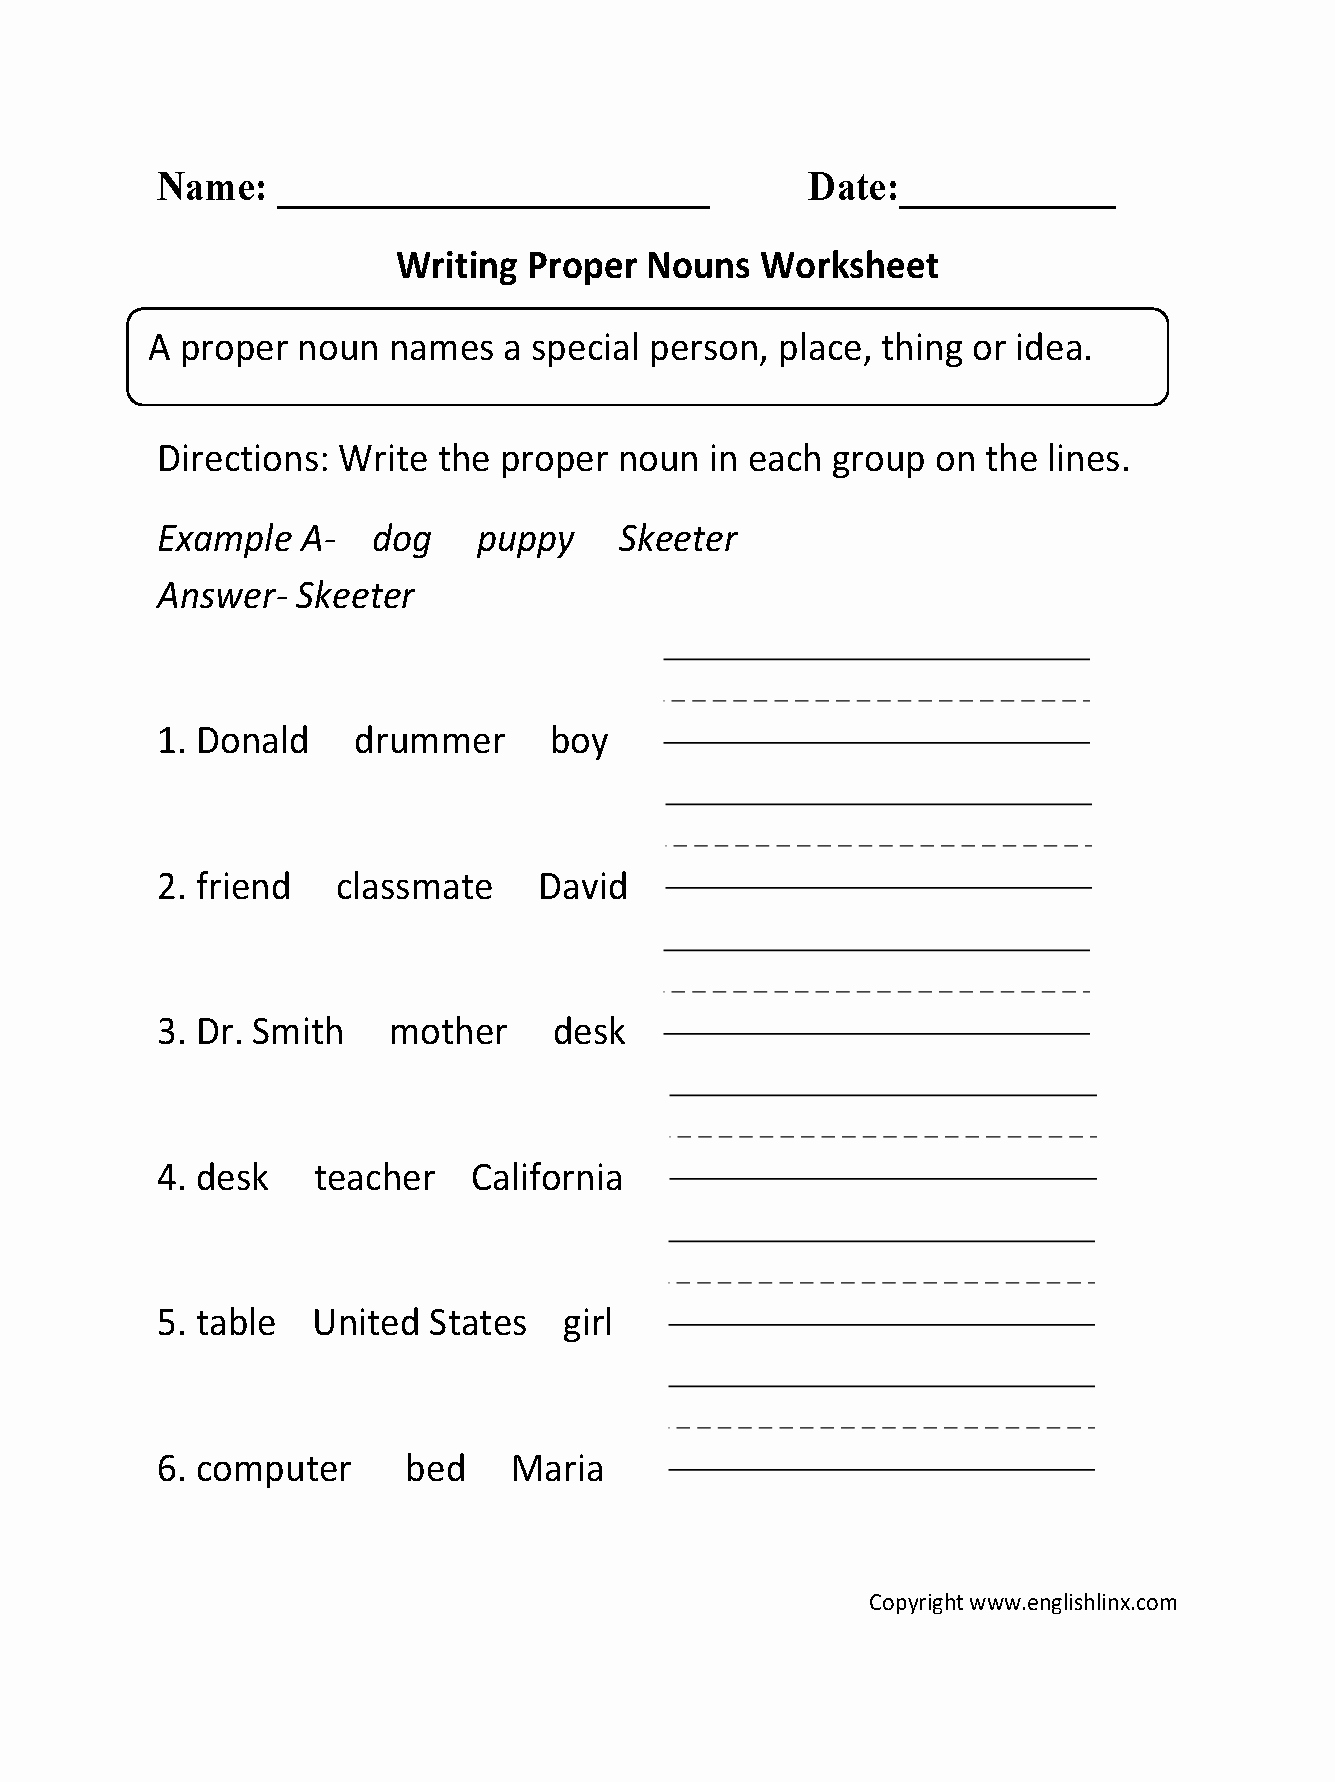 Practice 30 Simply Free Proper Noun Worksheets Simple Template Design